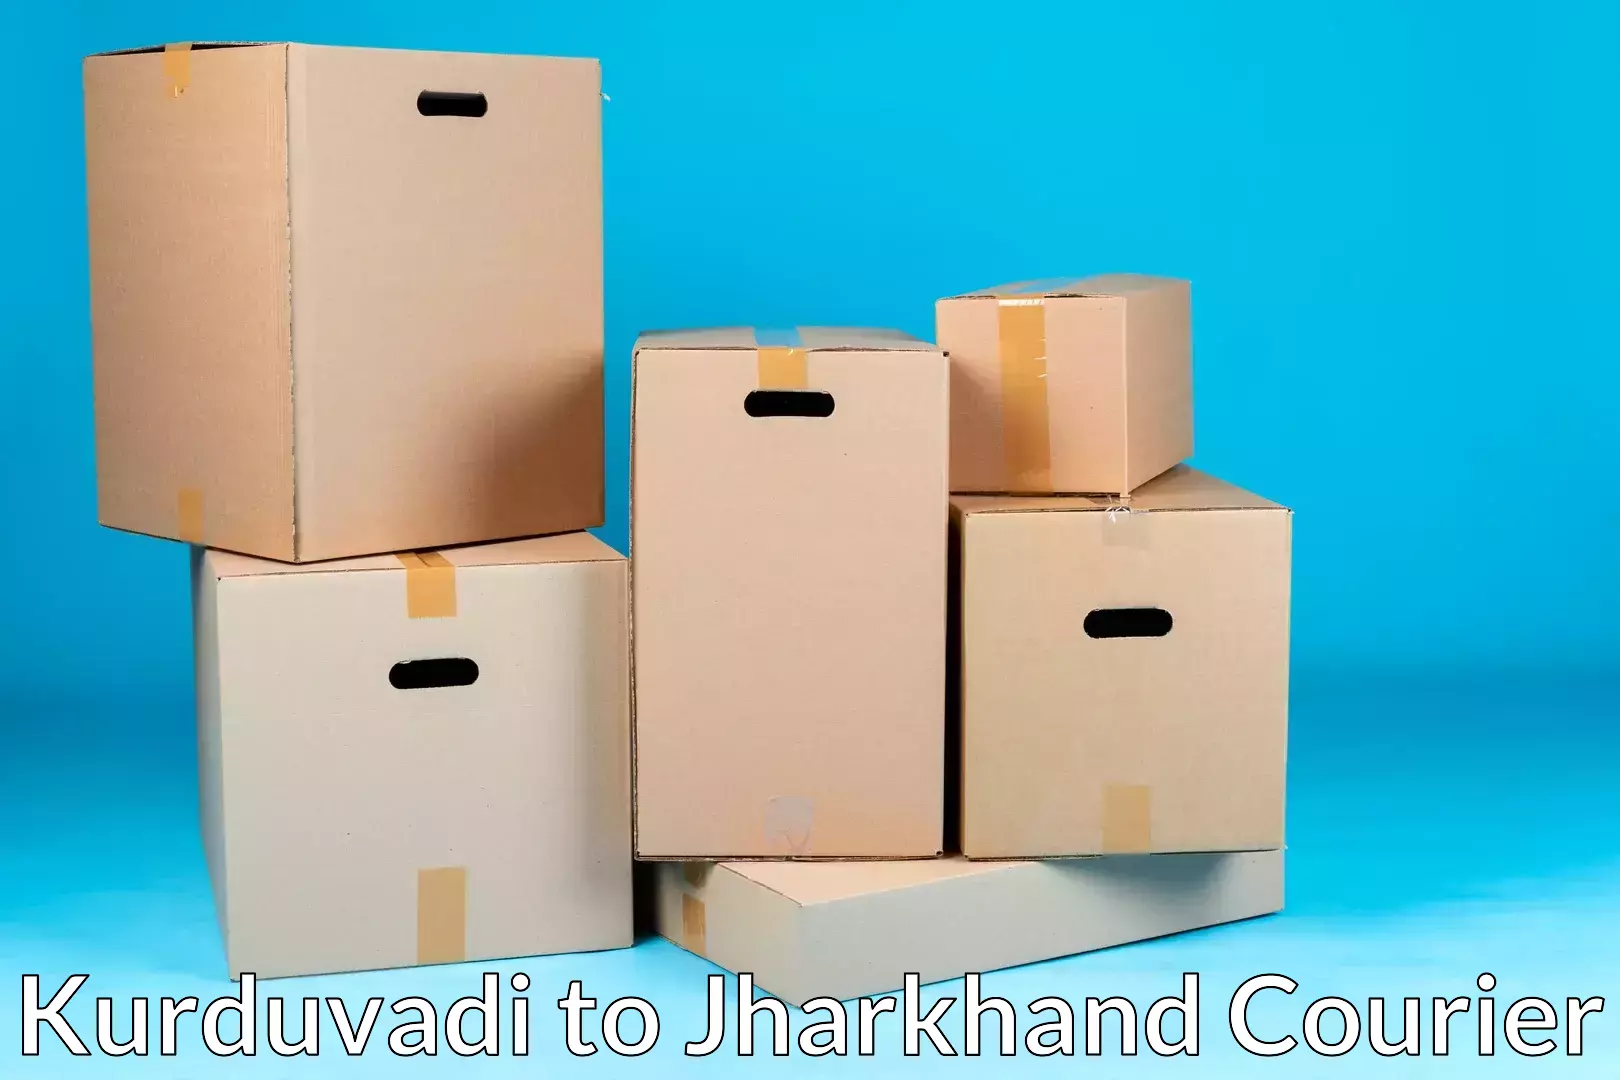 Moving and packing experts Kurduvadi to Jharkhand